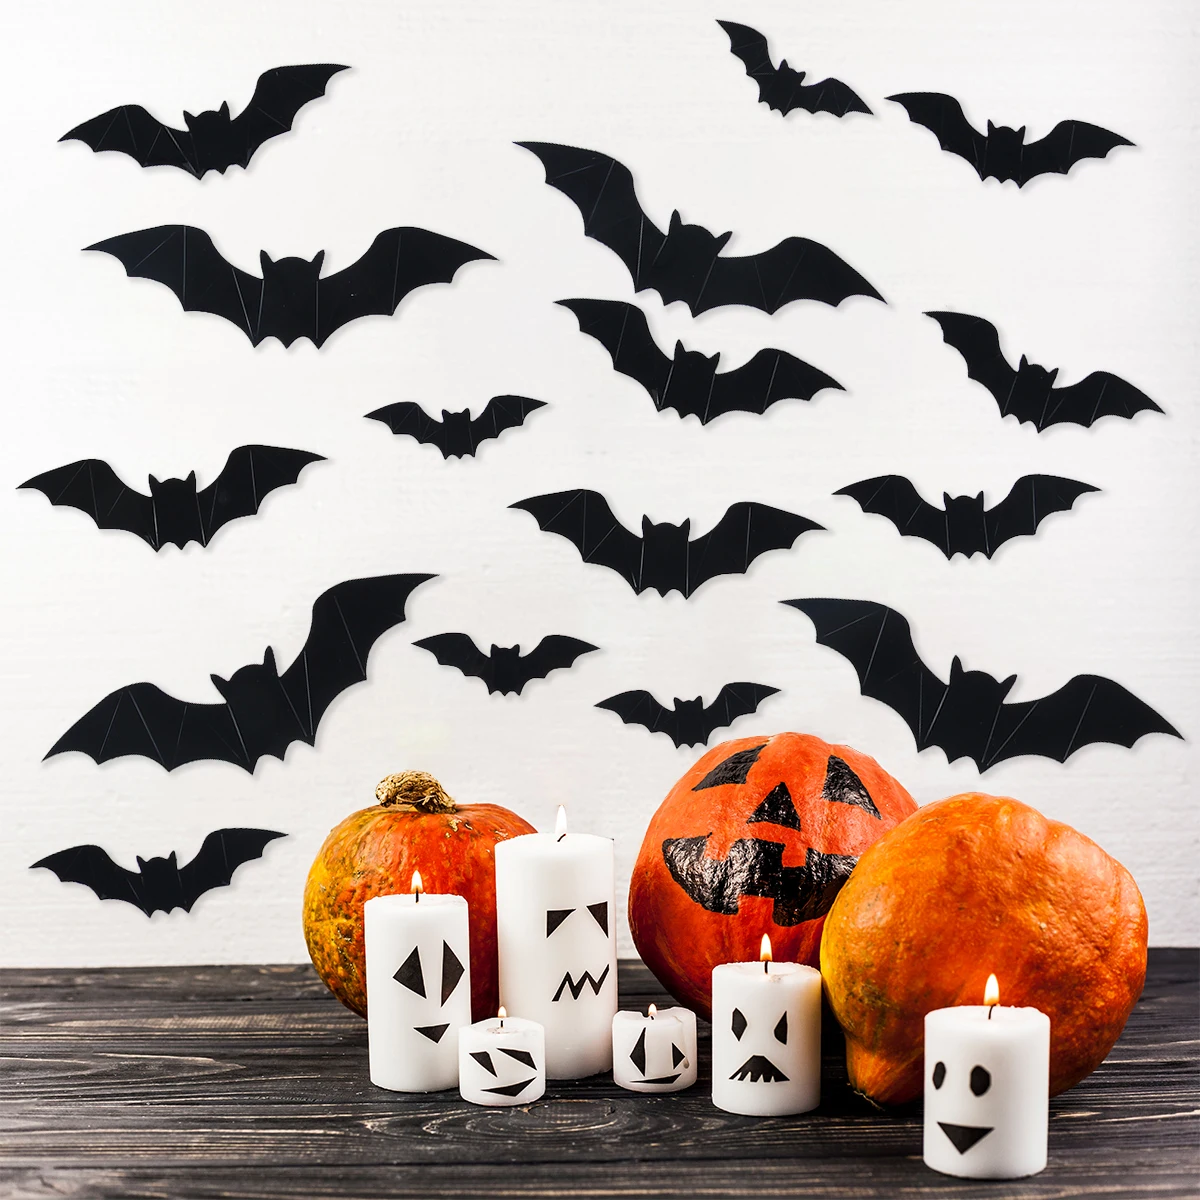 

16Pcs Bats Wall Sticker Halloween Decoration Scary Party Scene Props PVC Bat Ornaments Home Decoration DIY Wall Sticker